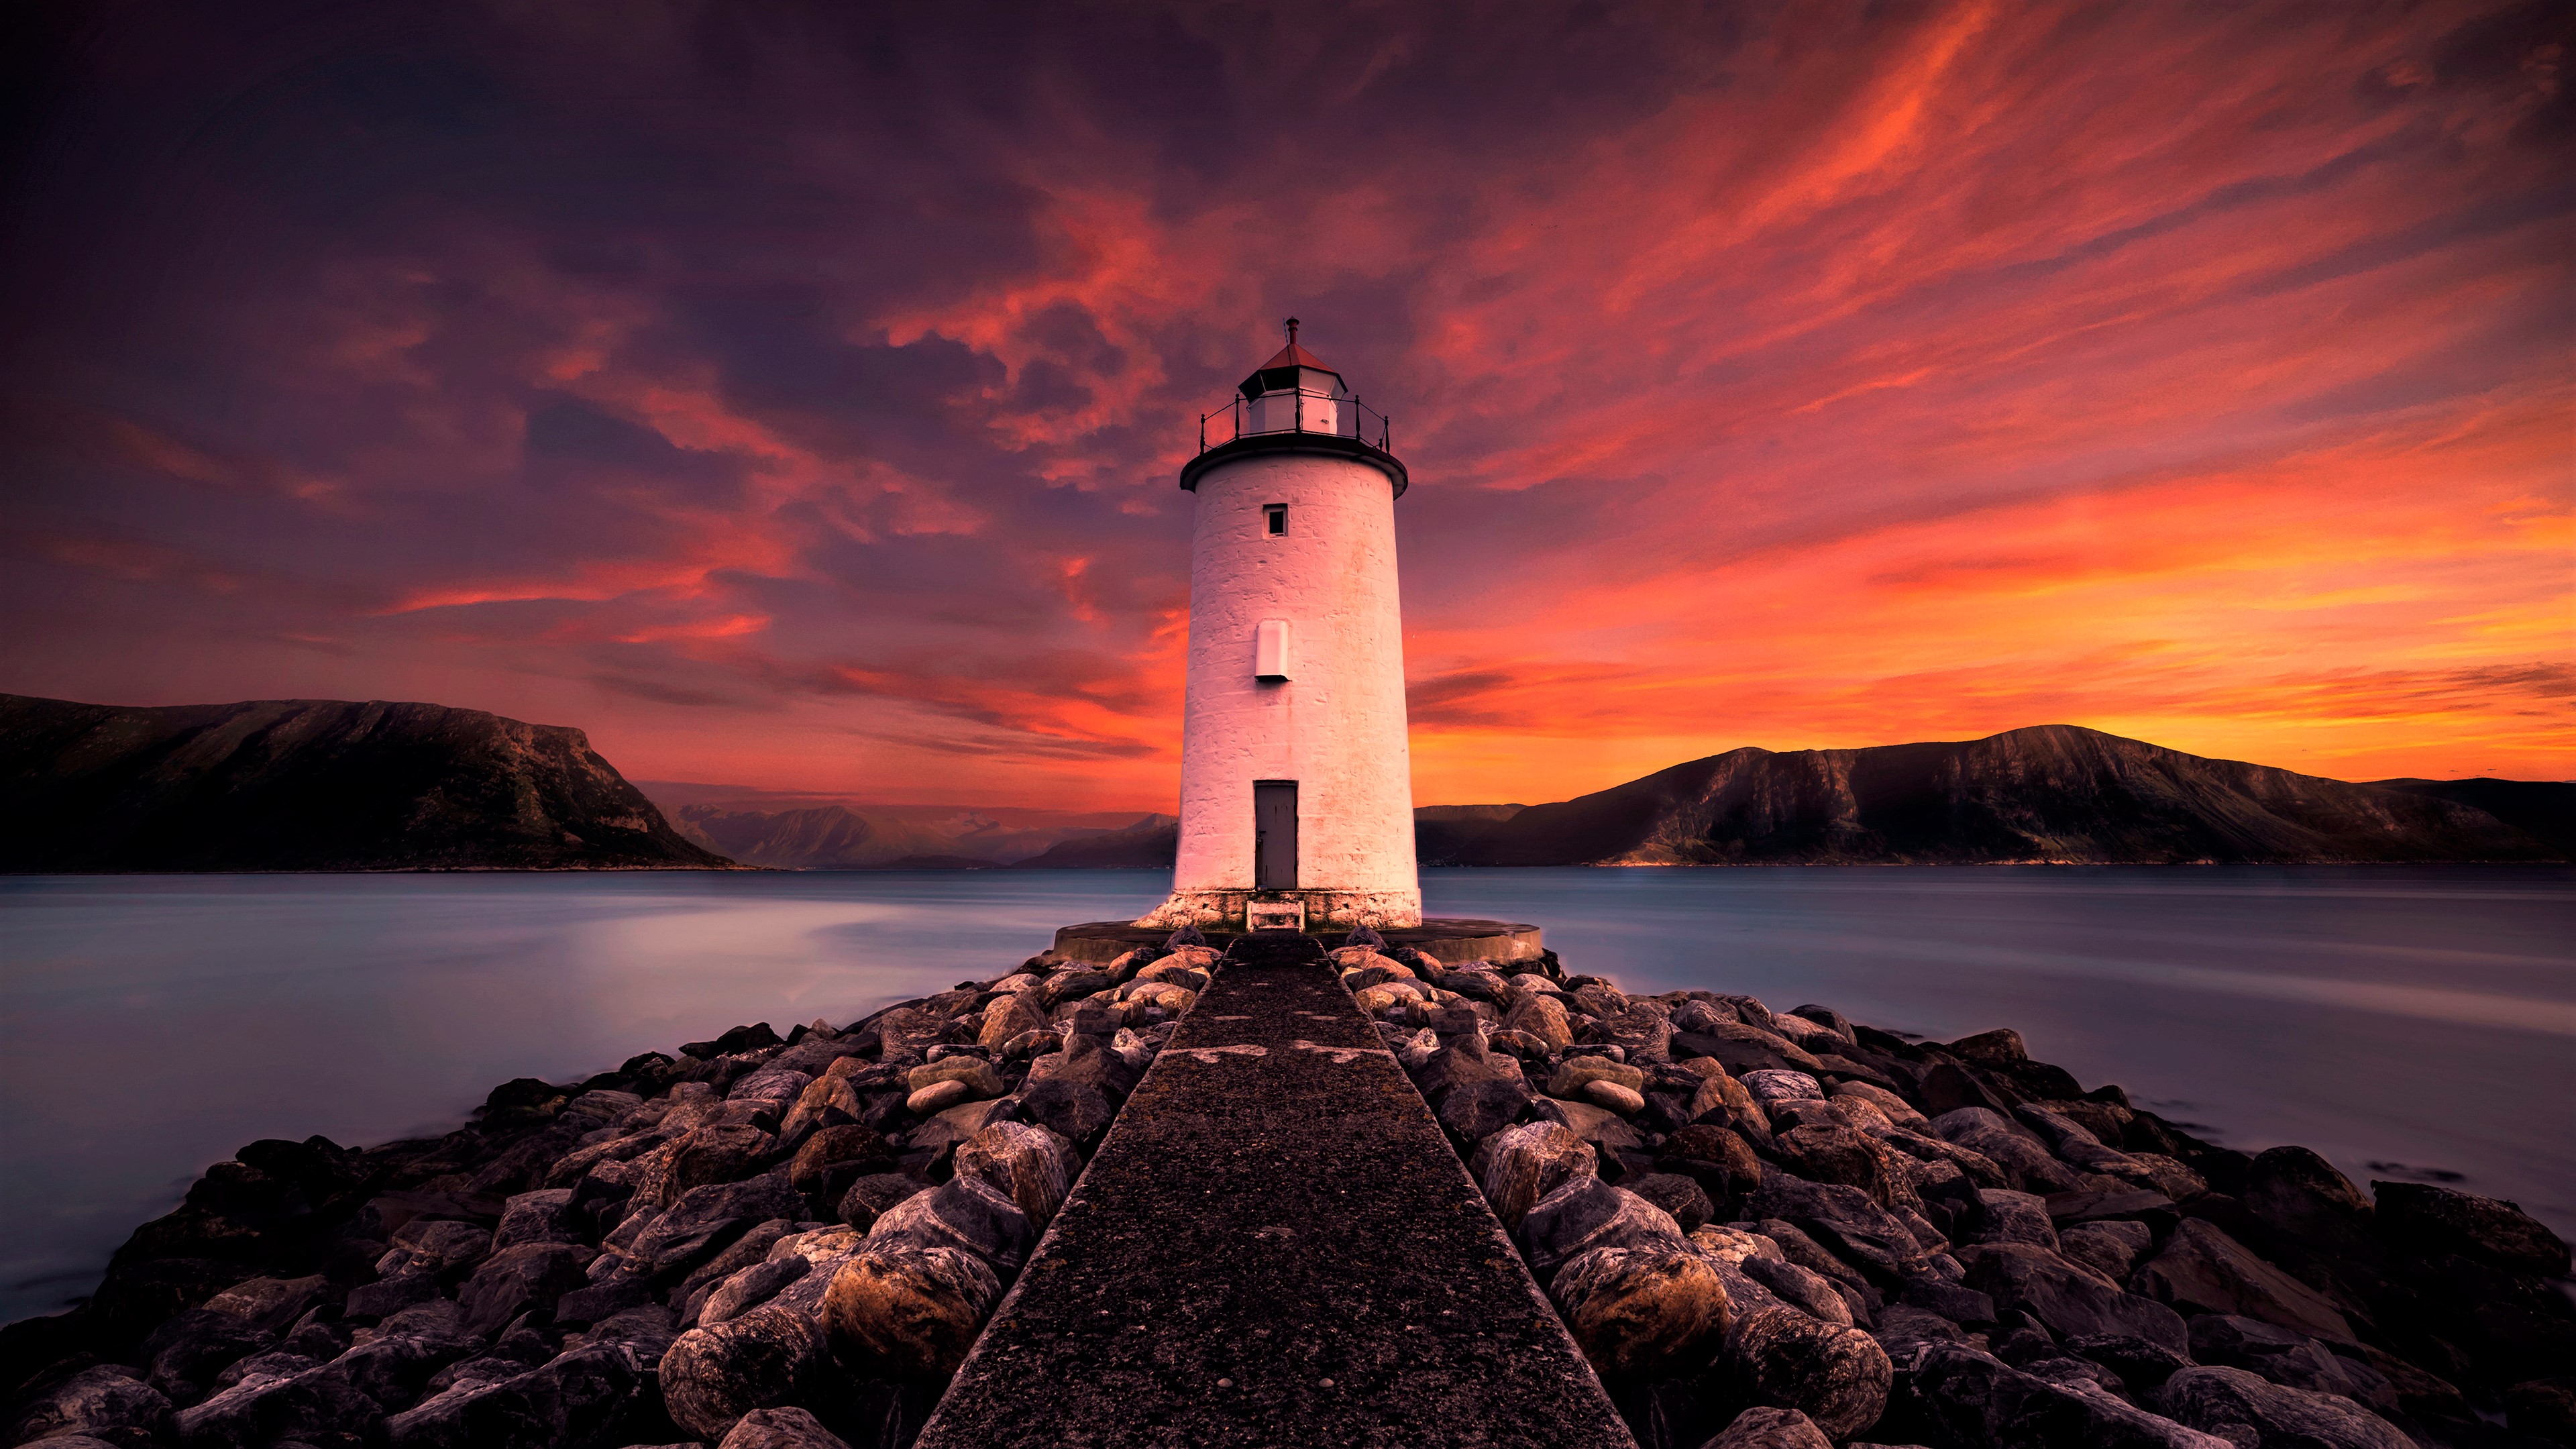 3840x2160 Surreal Sunrise Near Ocean Lighthouse 4k Wallpaper Hd Nature ...